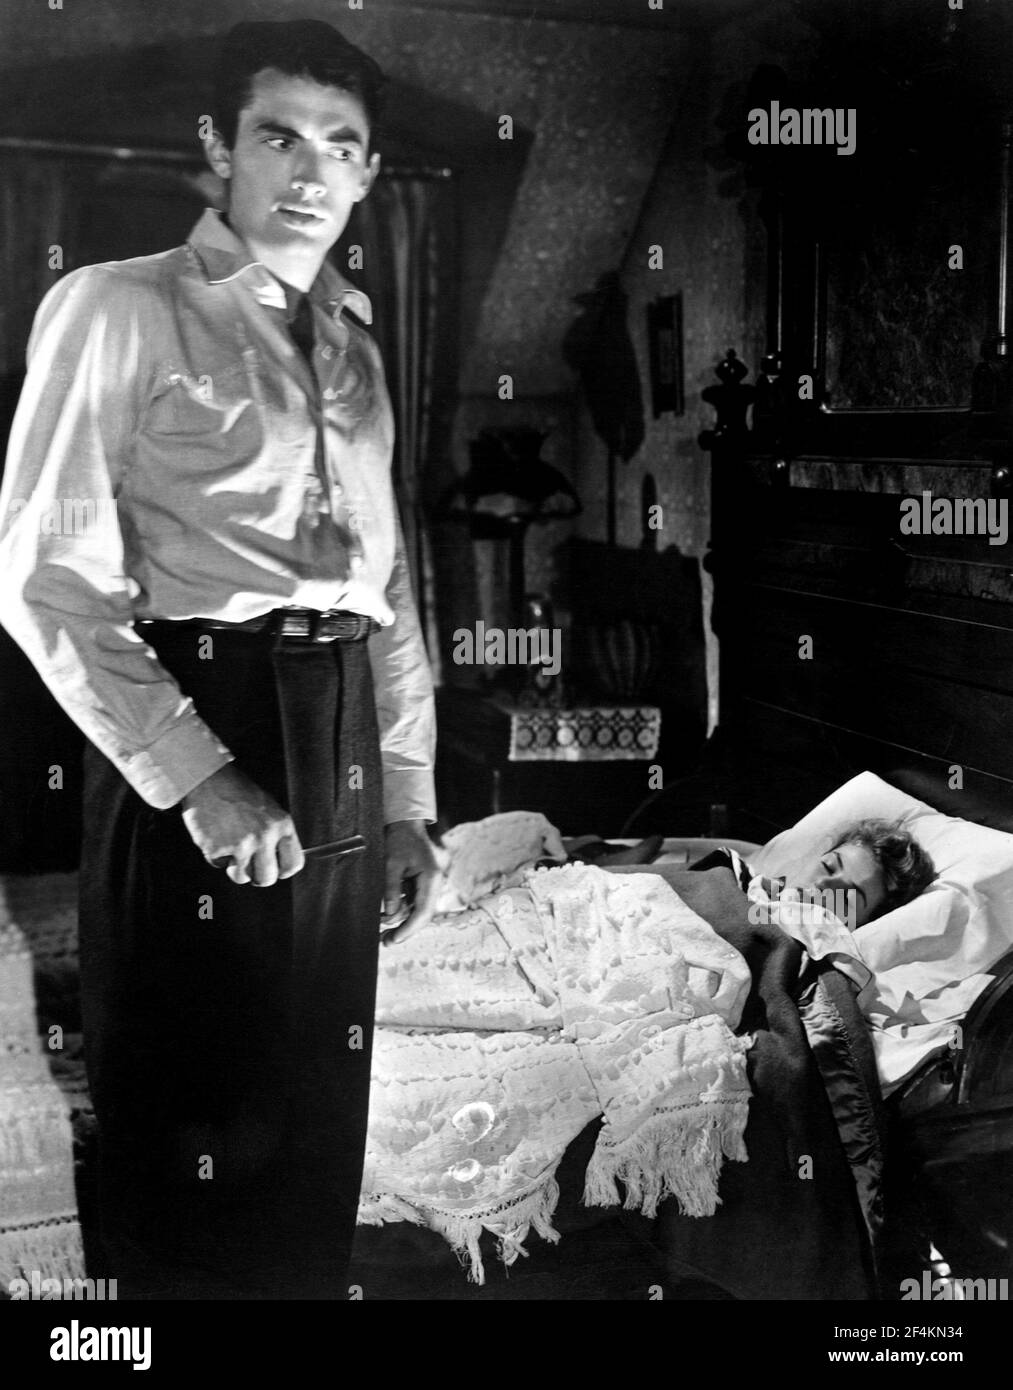 GREGORY PECK et INGRID BERGMAN dans SPELLBOUND (1945), dirigé par ALFRED HITCHCOCK. Credit: Selznick International Pictures/Vanguard films / Album Banque D'Images